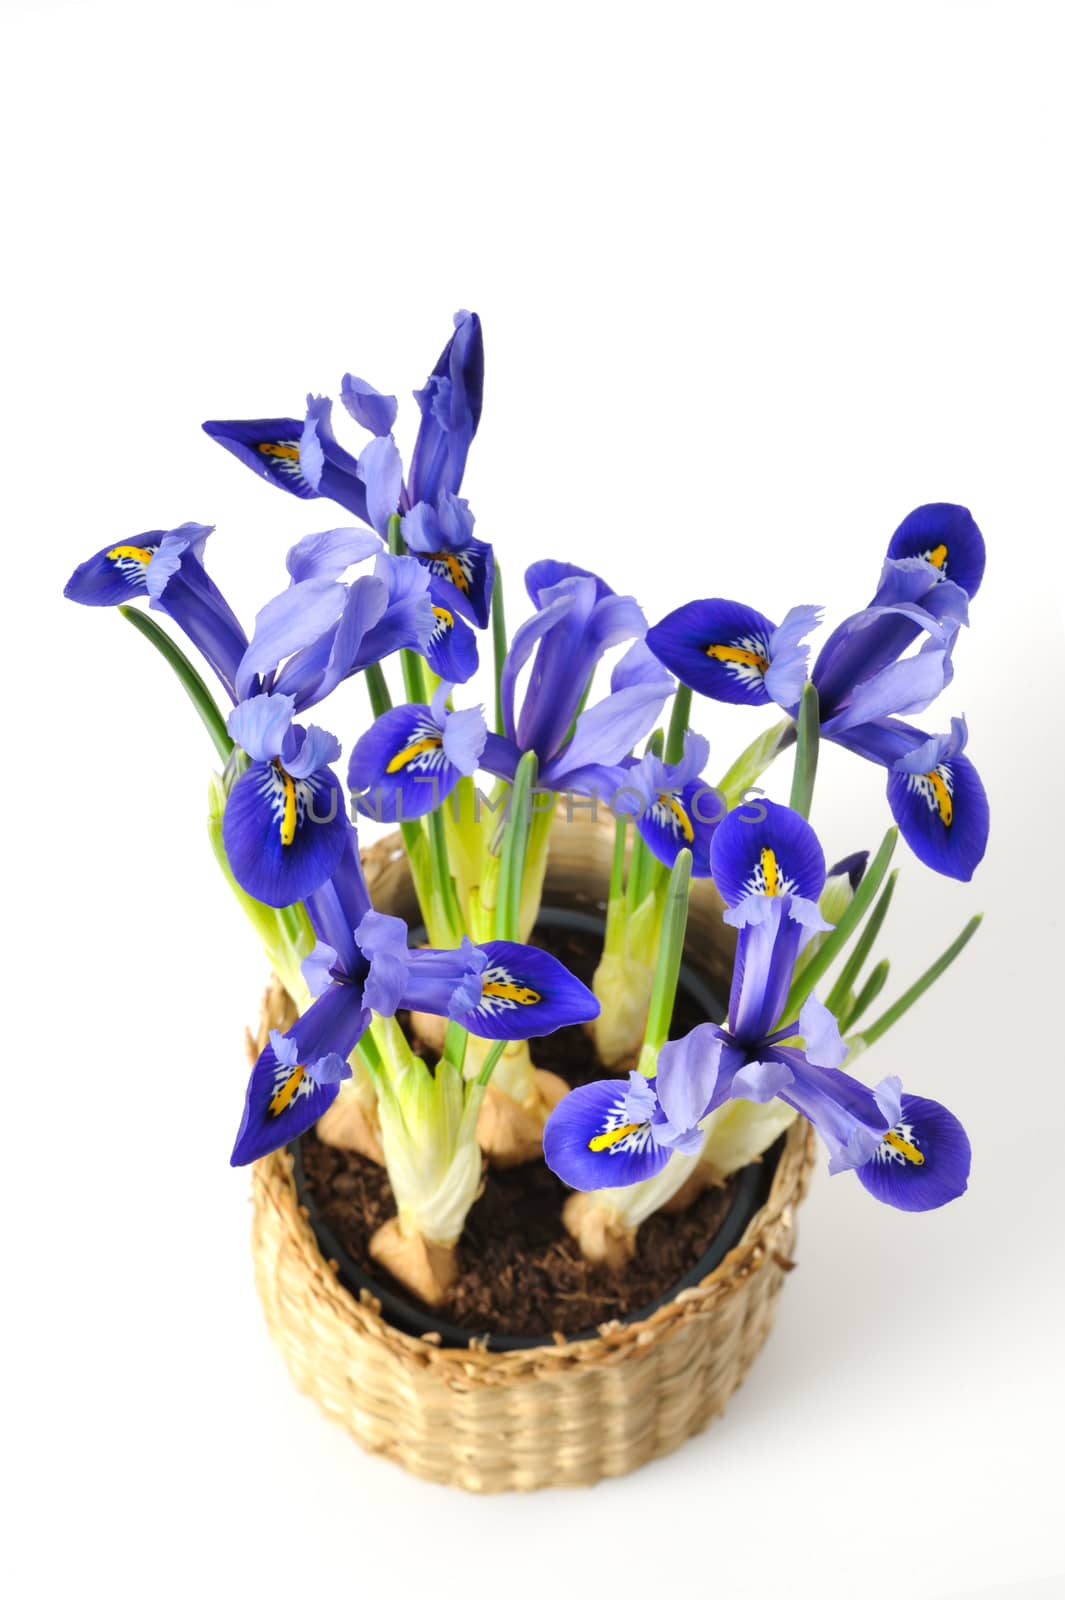 Mini-iris in a pot by mady70